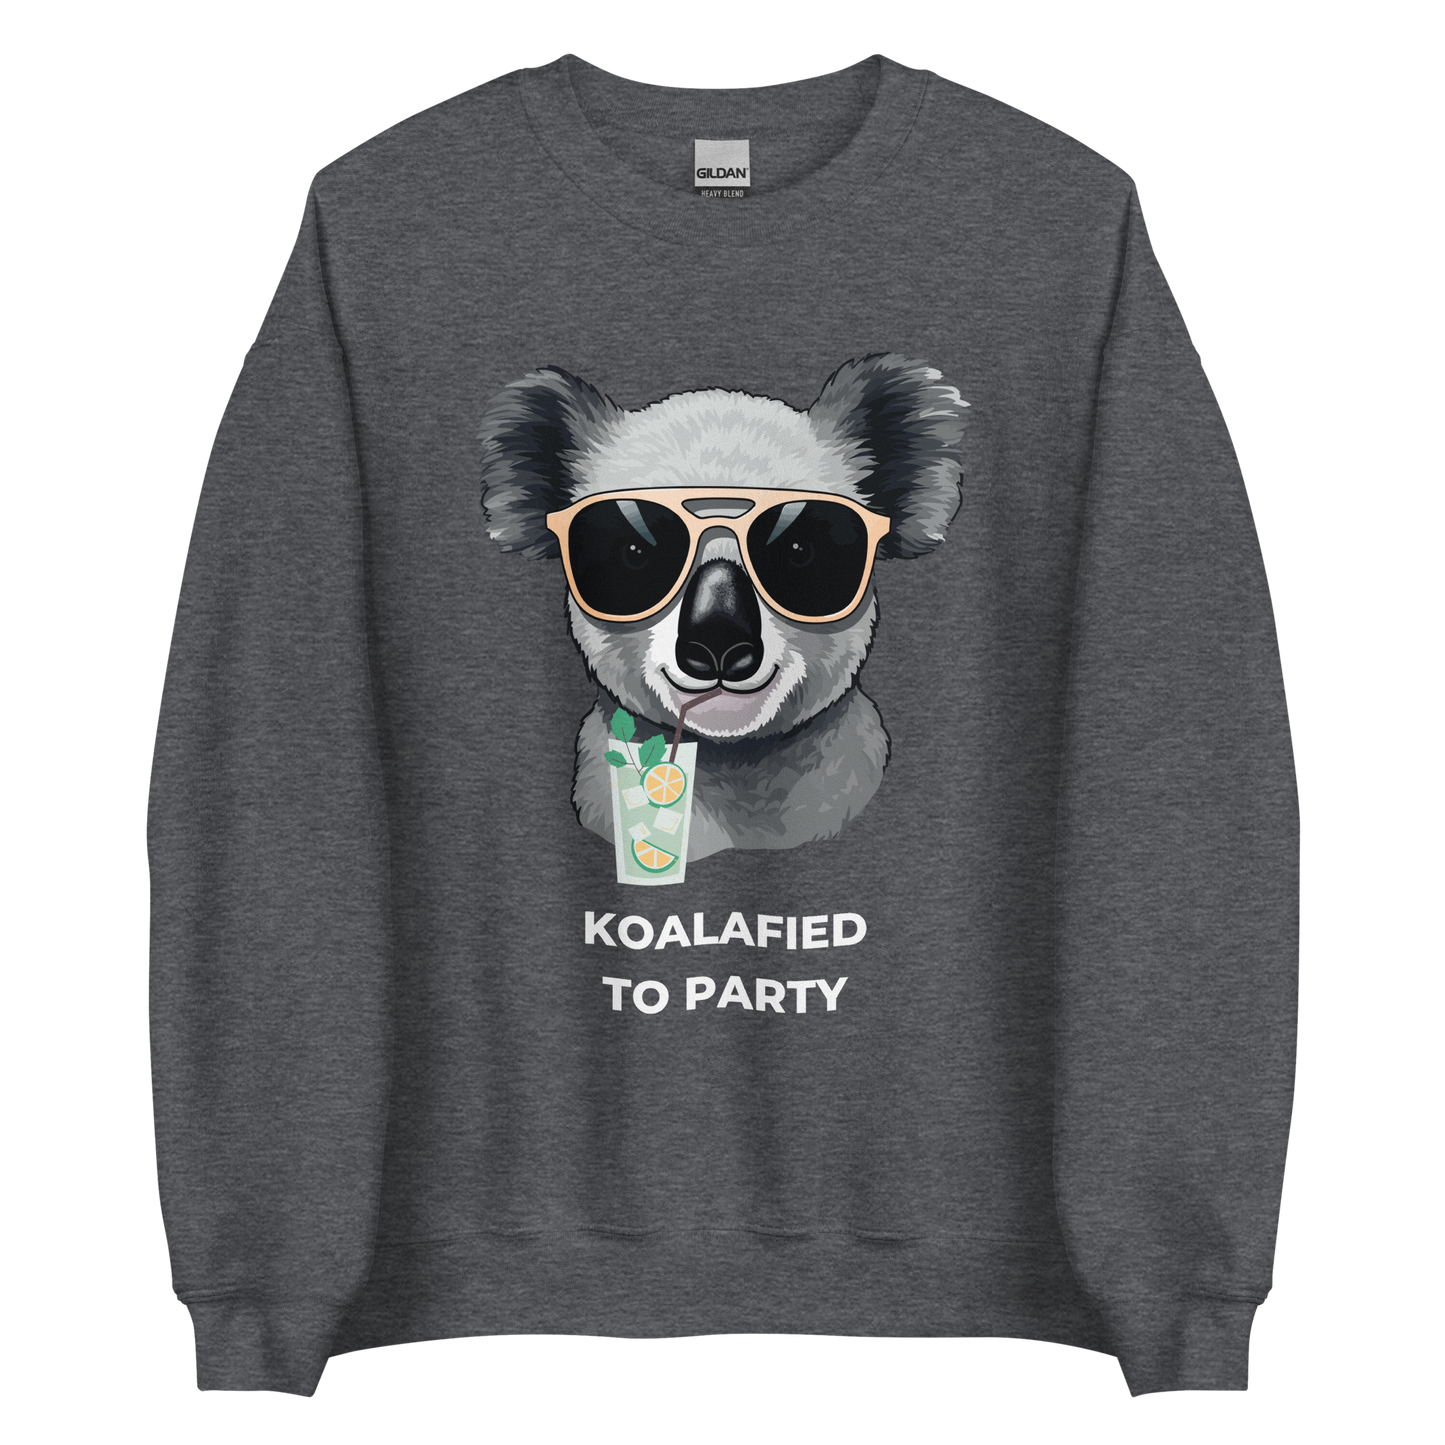 Dark Heather Koala Sweatshirt featuring an adorable Koalafied To Party graphic on the chest - Funny Graphic Koala Sweatshirts - Boozy Fox